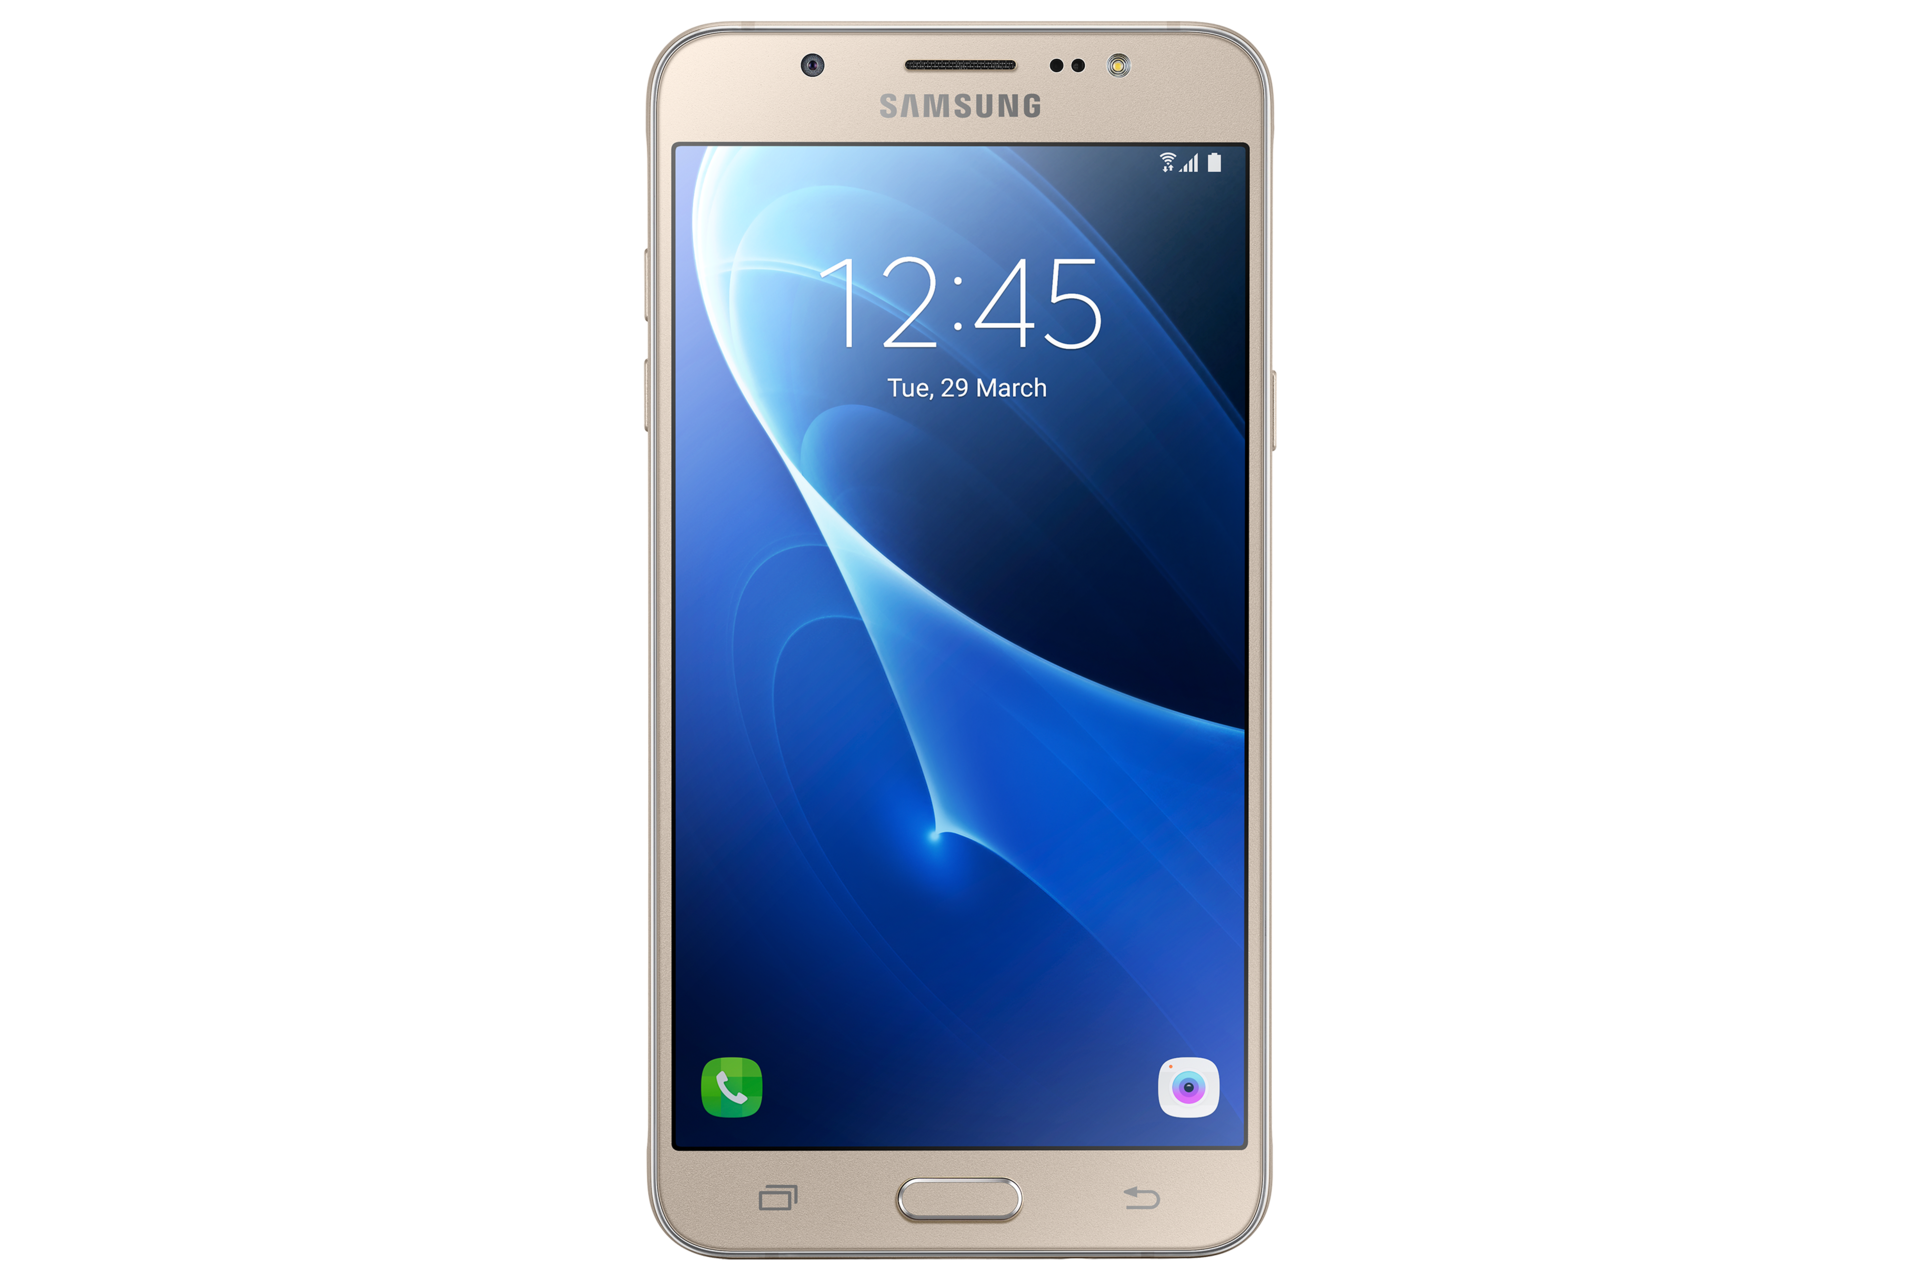 Chargeur secteur Samsung Galaxy J7 Pro smartphone - Blanc - France Chargeur